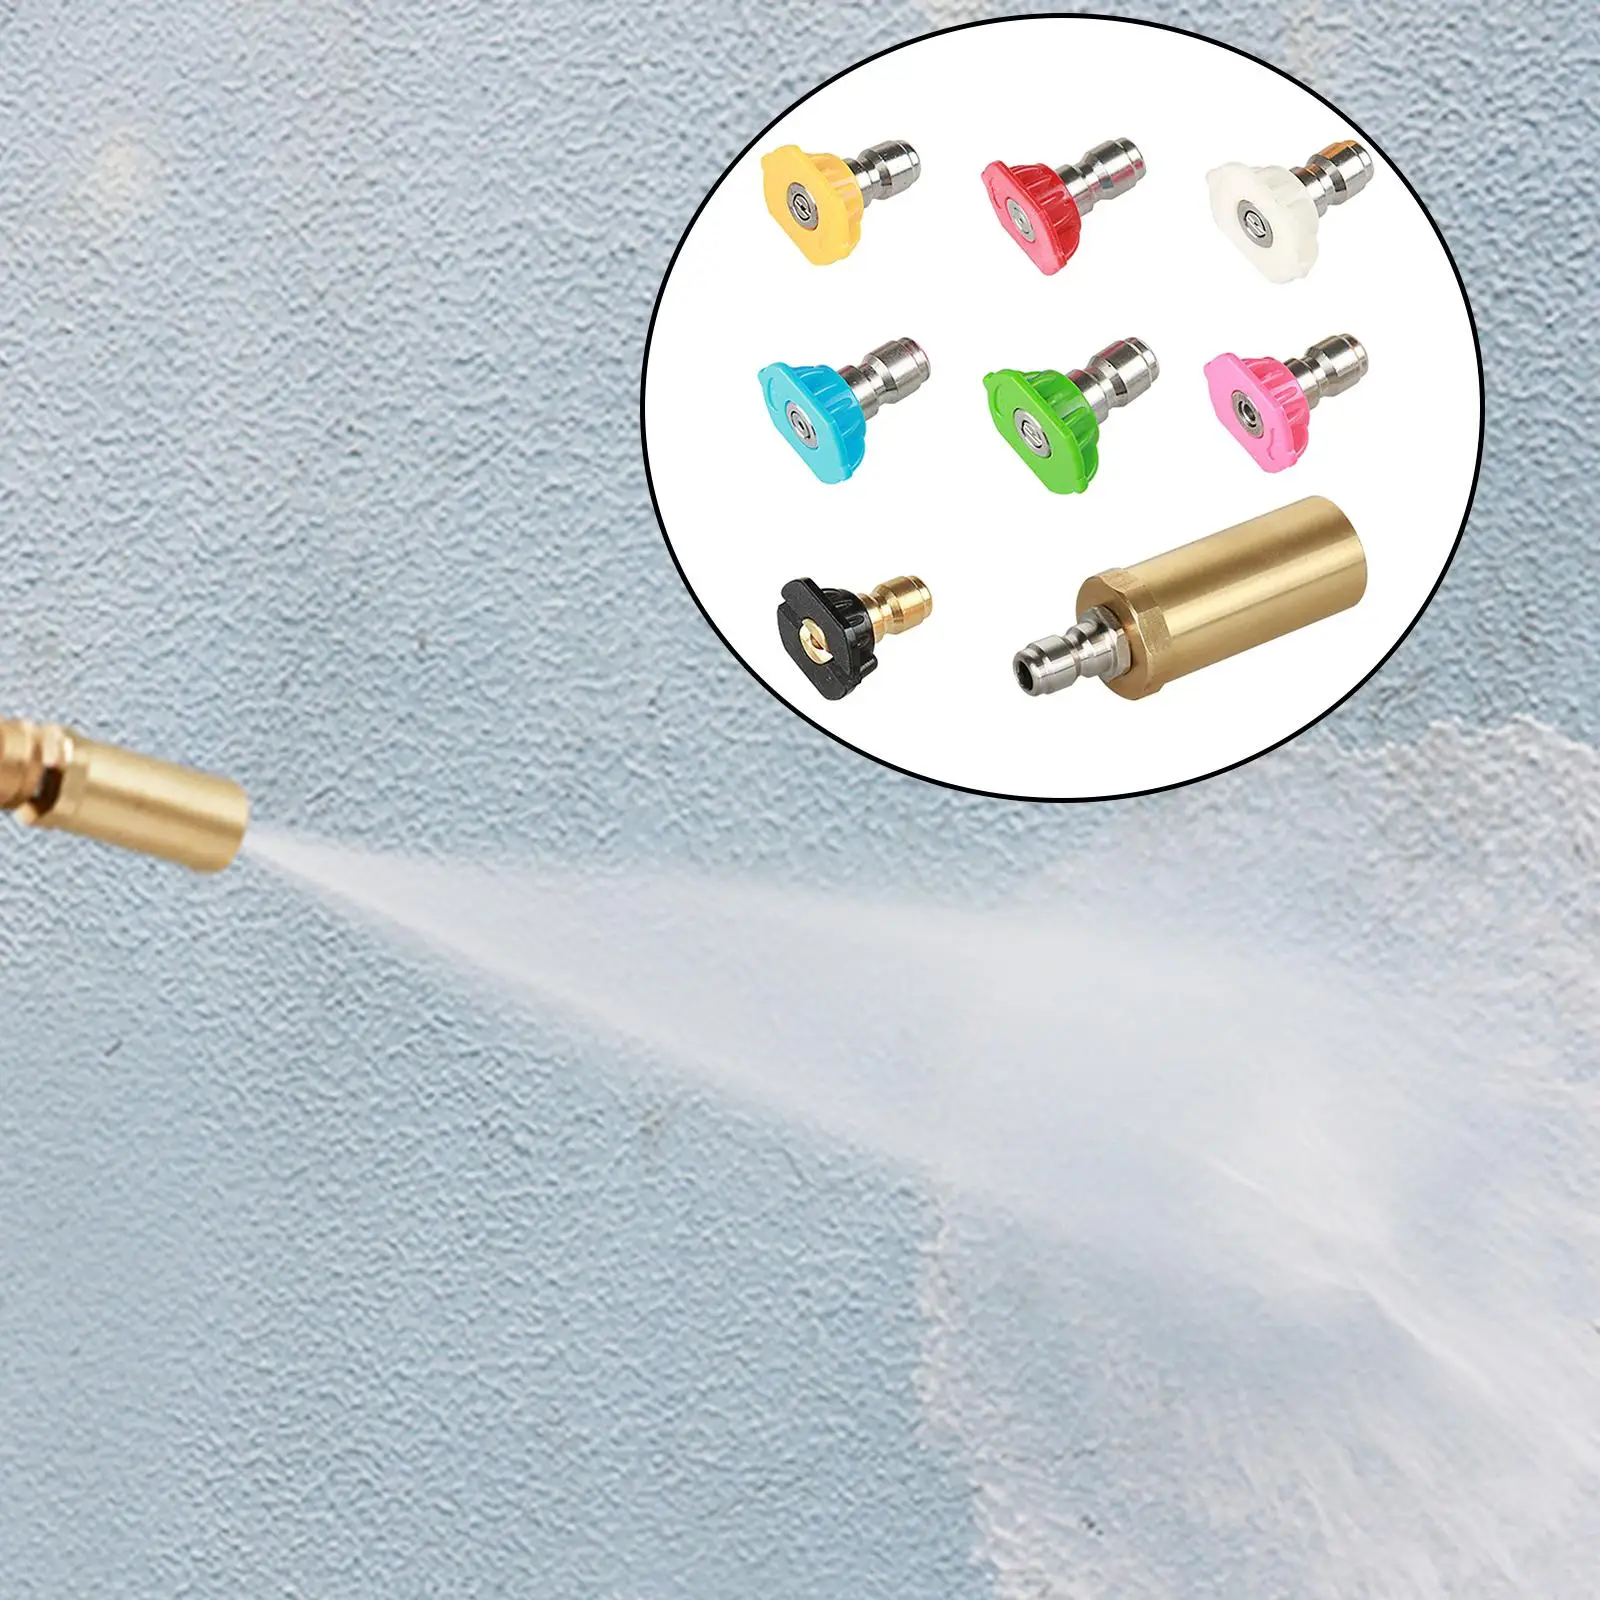 Brass Pressure Washer Nozzle with 7 Spray NozzleKit